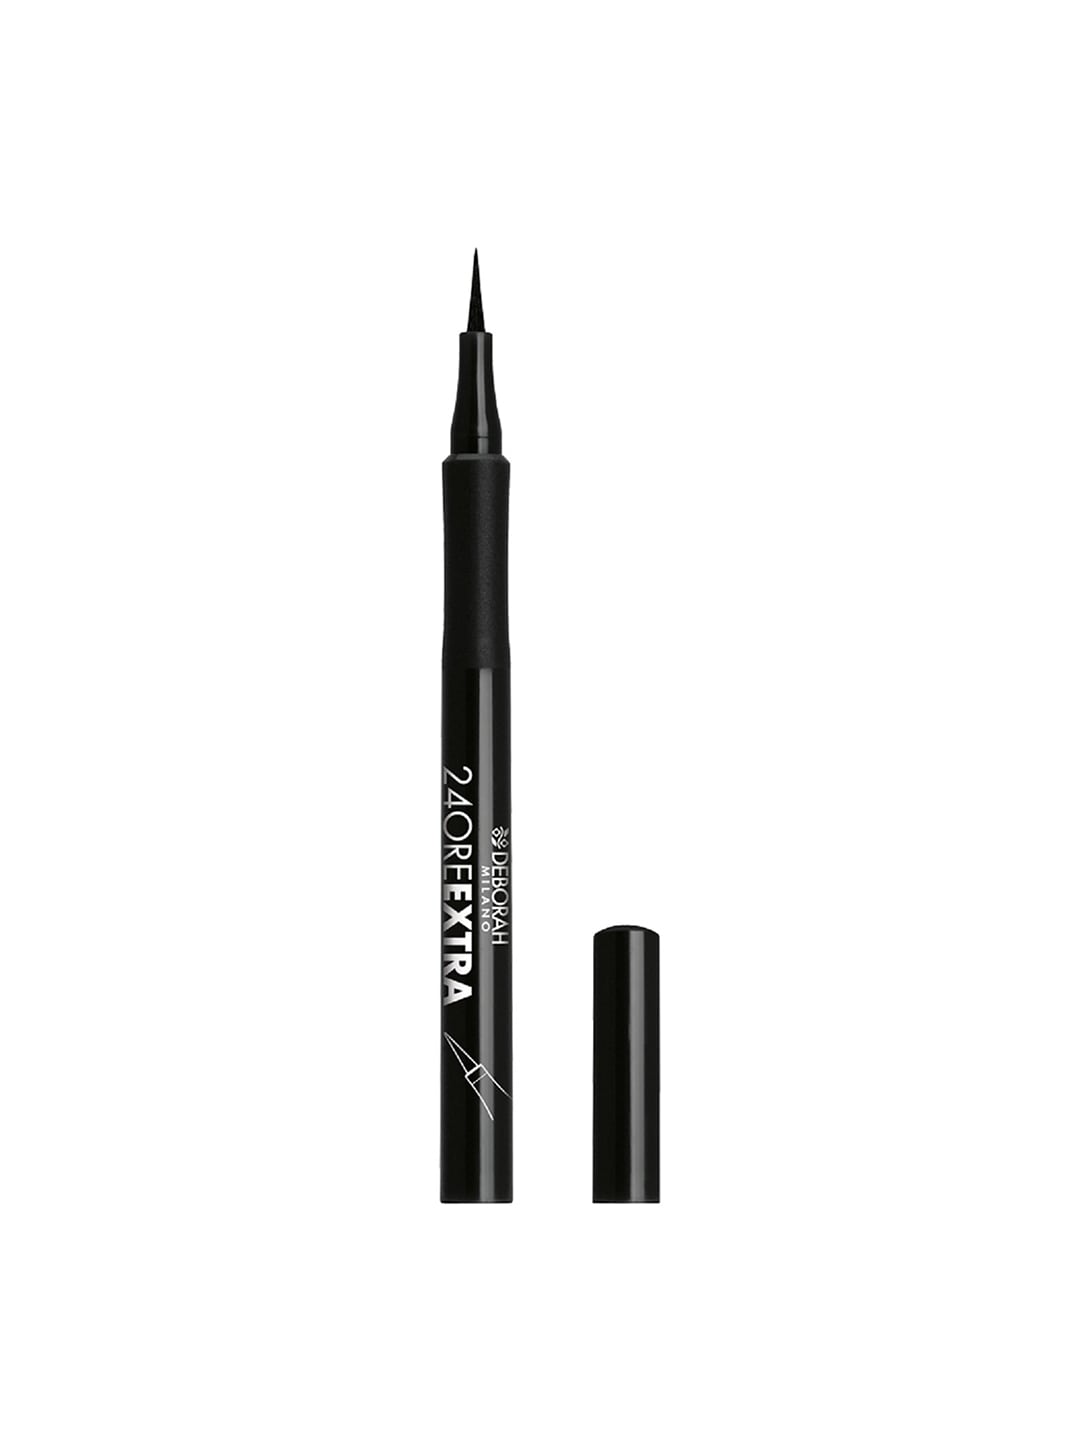 Deborah Milano 24ORE Extra Black Pen Eyeliner 01 Price in India